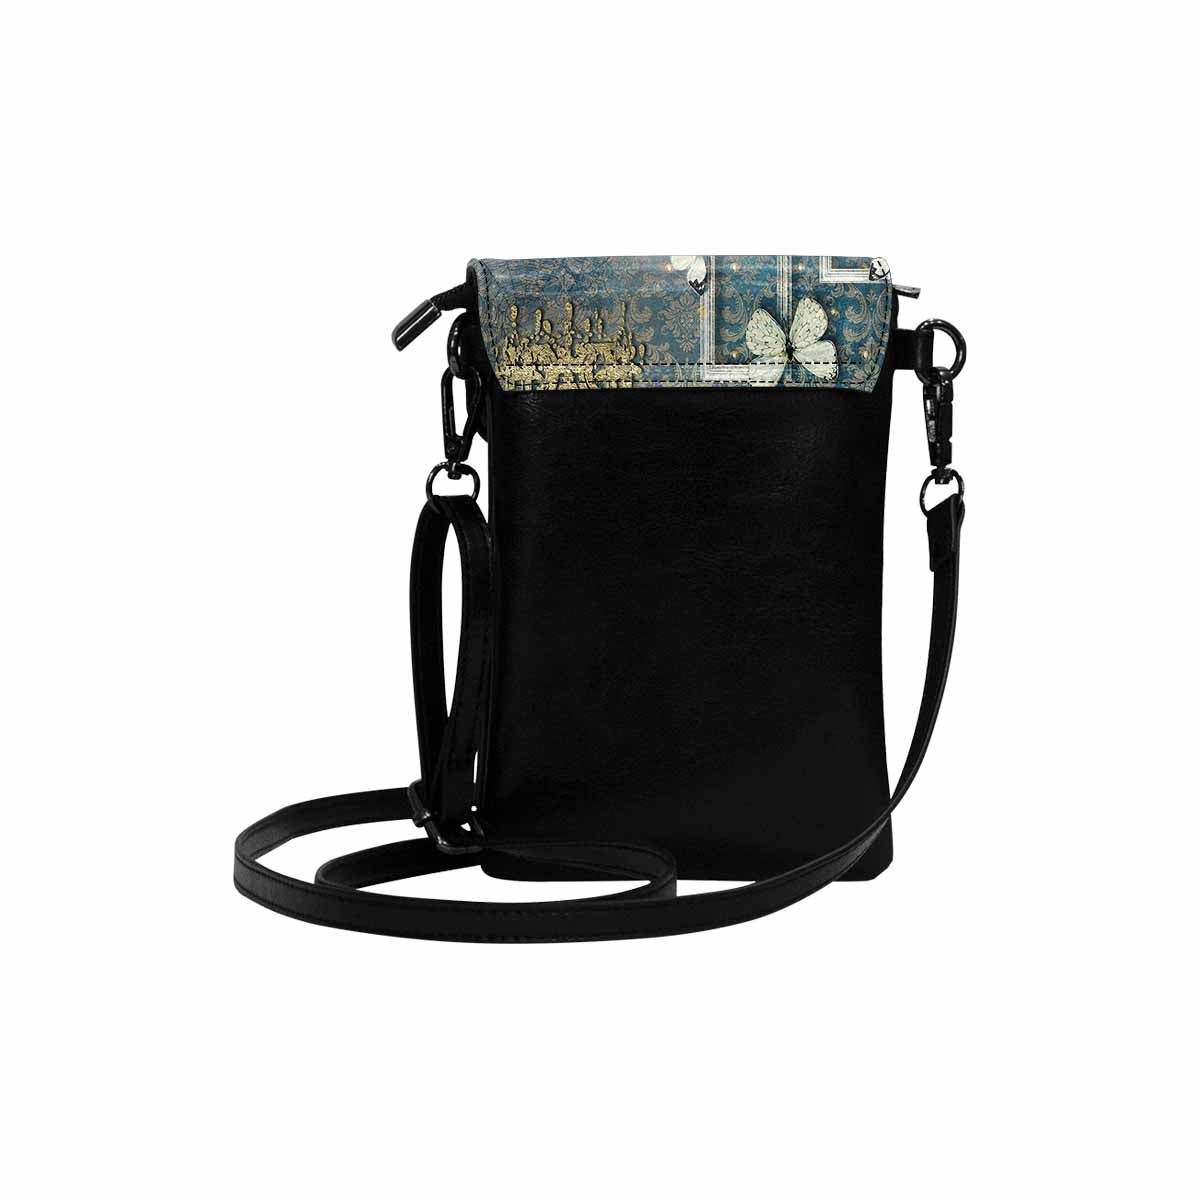 General Victorian cell phone purse, mobile purse, Design 10